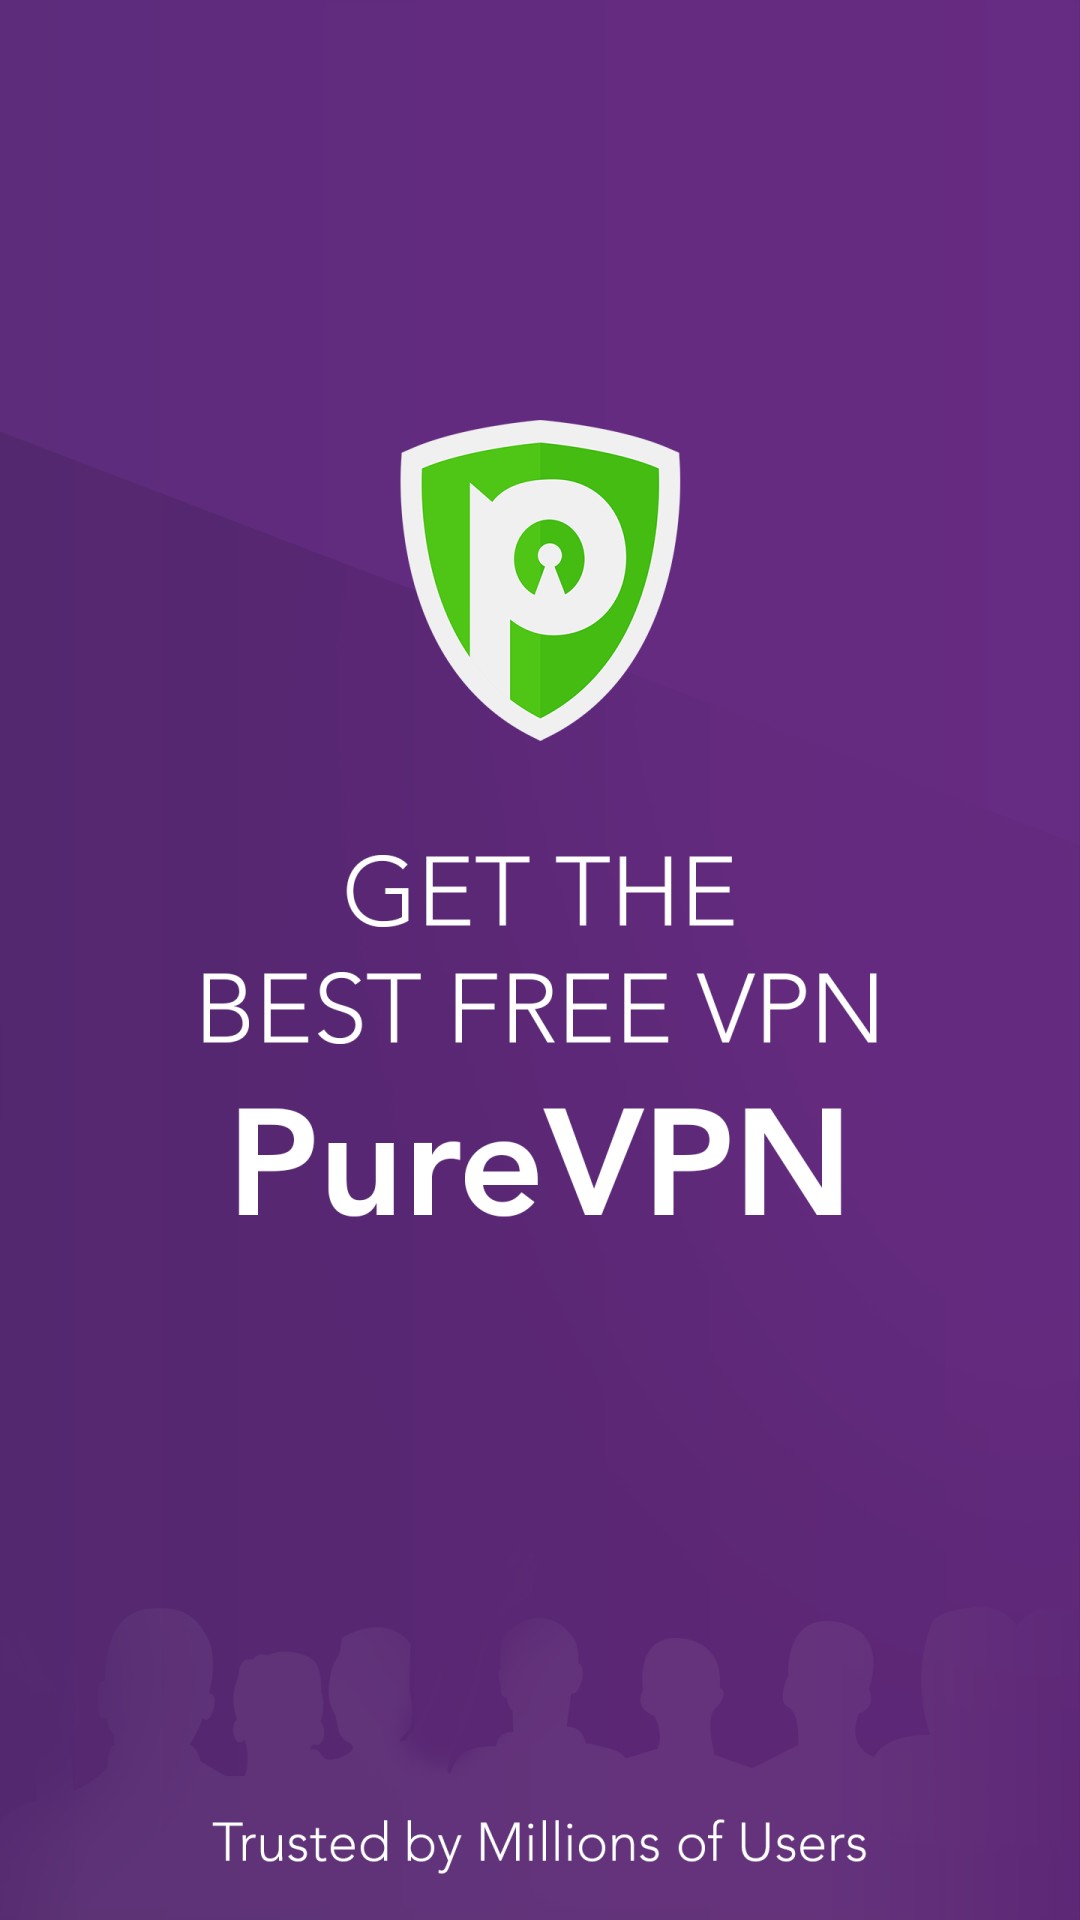 purevpn app screenshots 2018